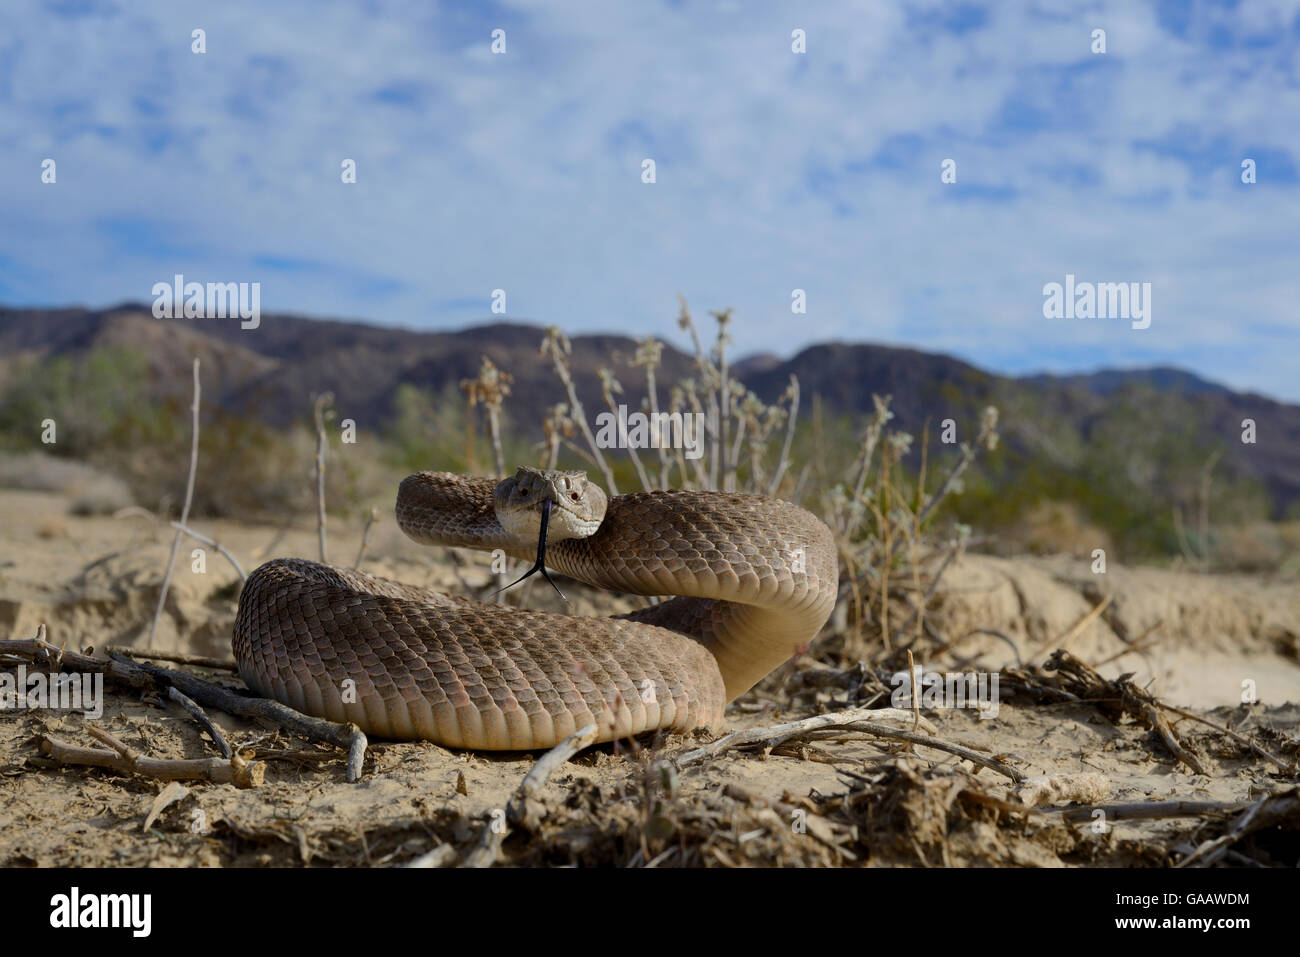 Western diamondback rattlesnake (Crotalus atrox) tasting air, in habitat, Arizona, USA, October. Controlled conditions Stock Photo